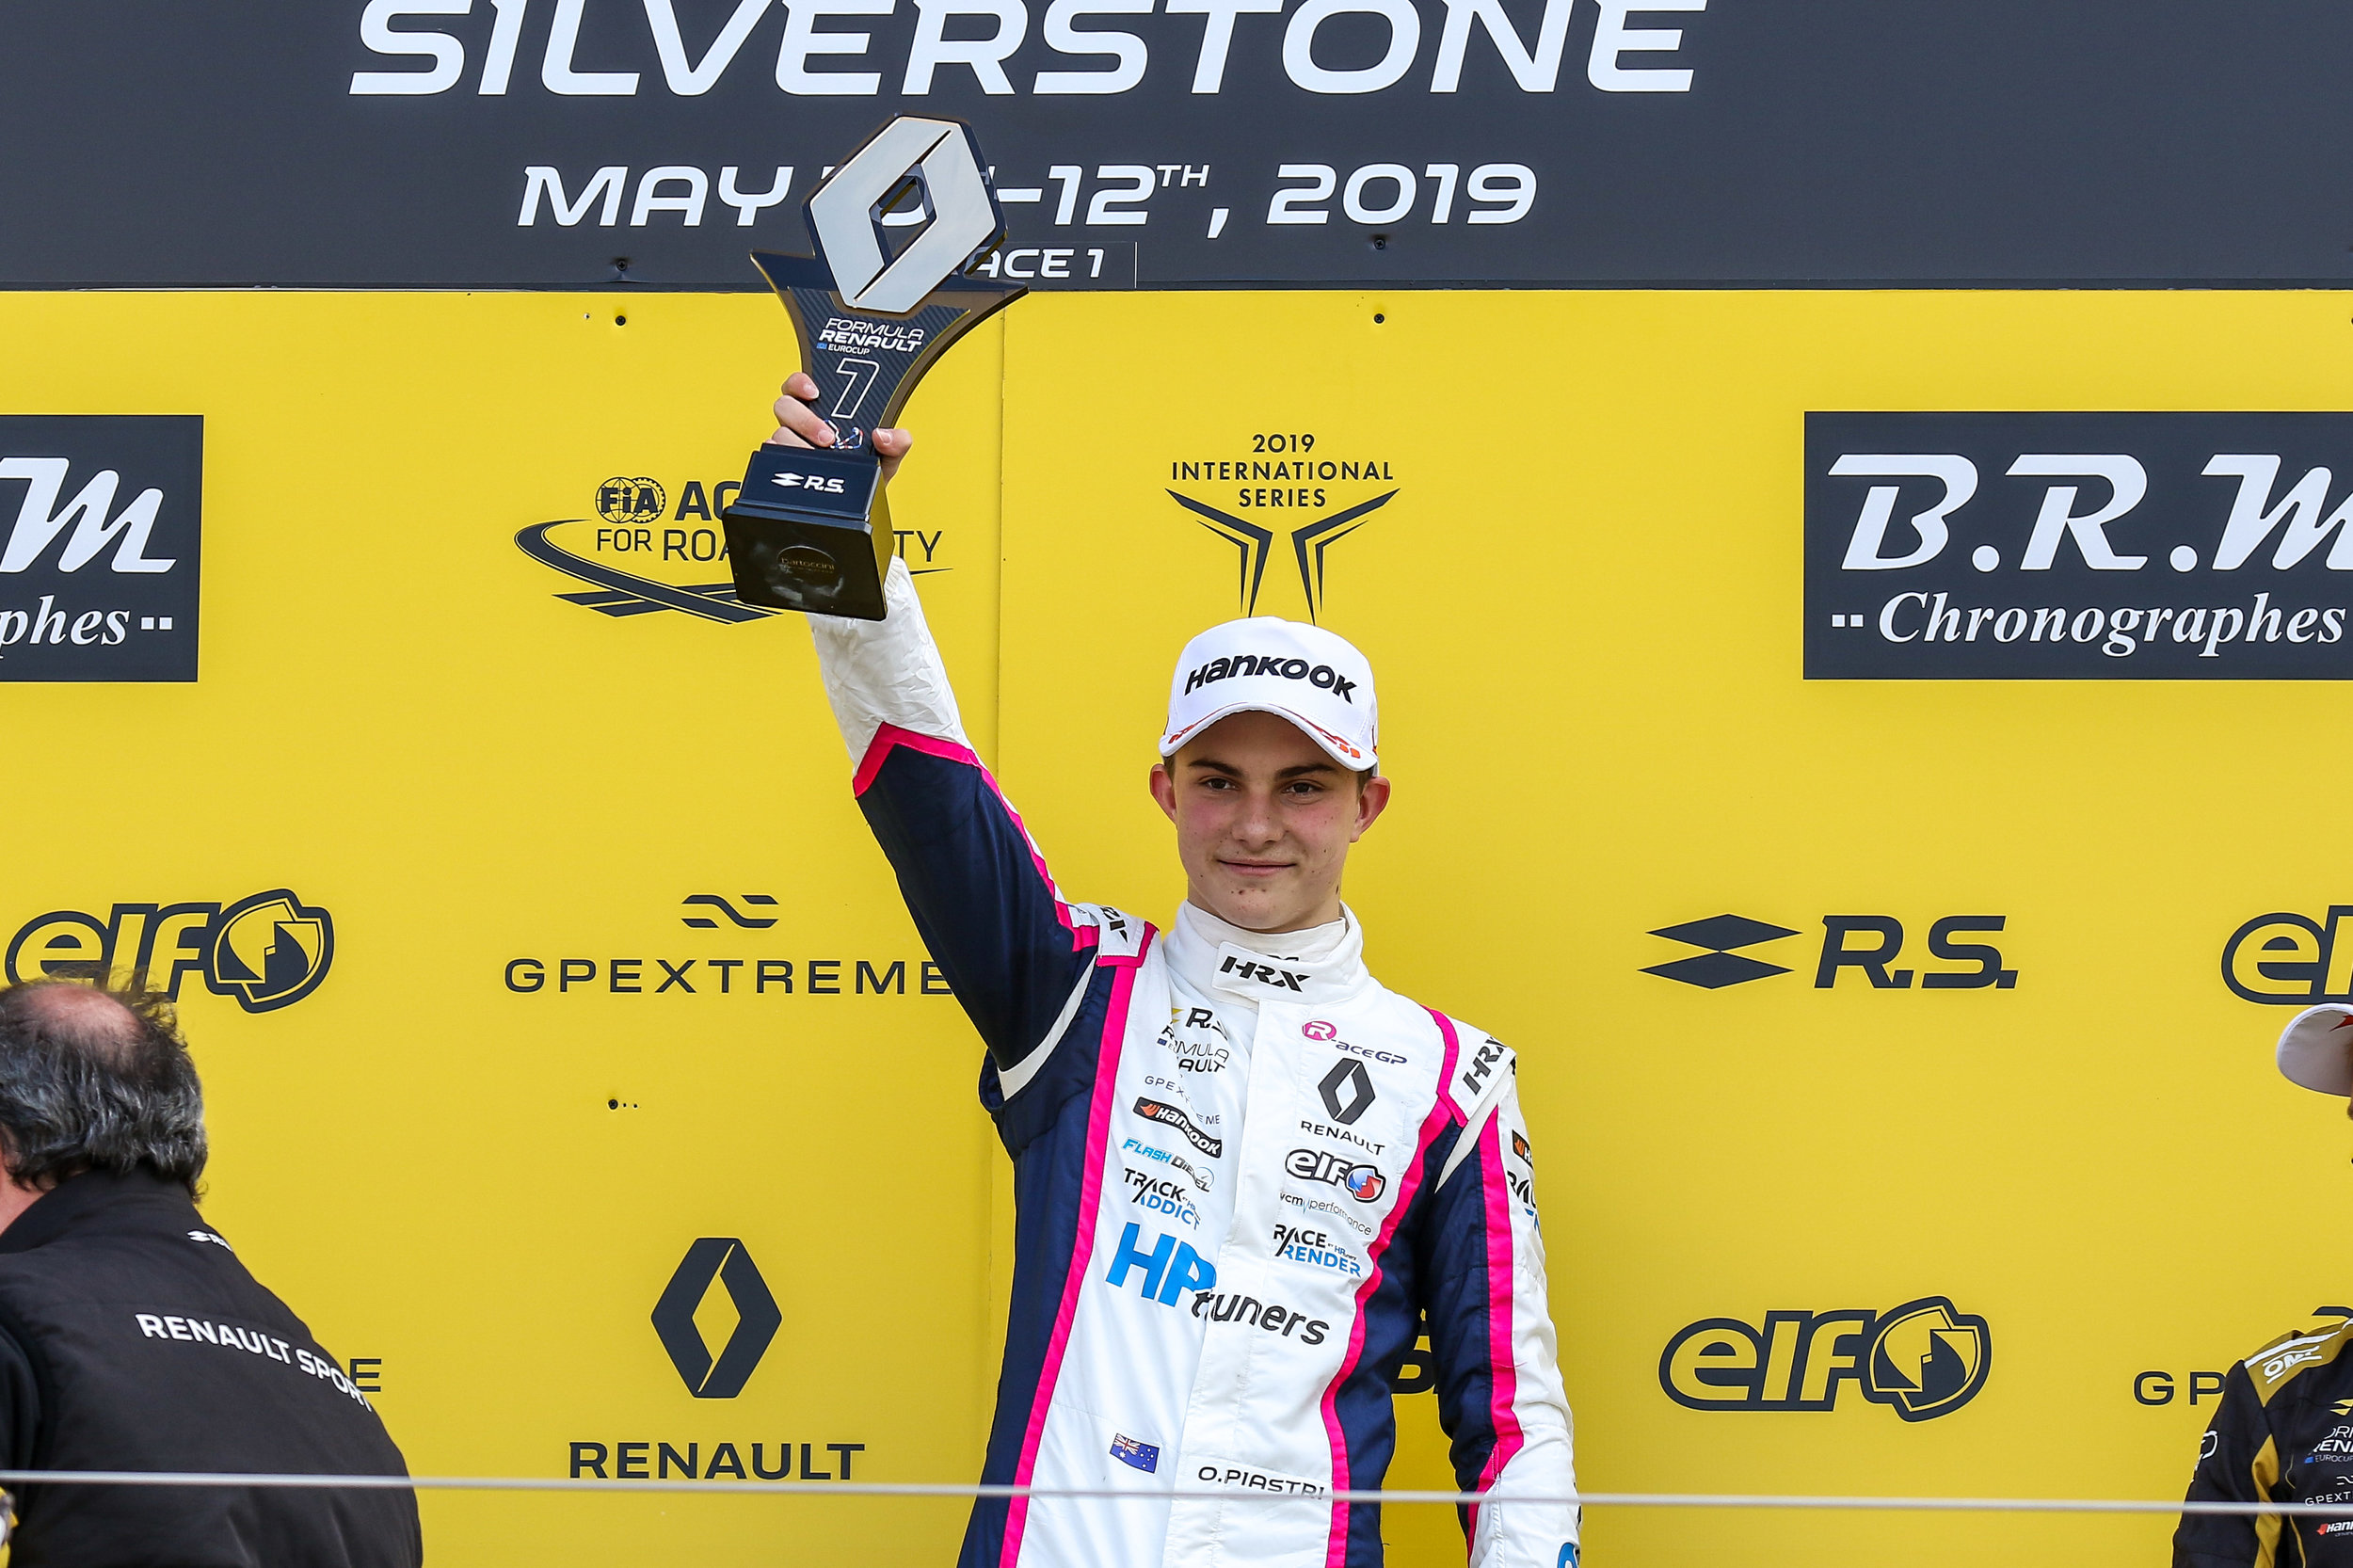 Australian Oscar Piastri sweeps Formula Renault Eurocup weekend at Silverstone — Raceweek